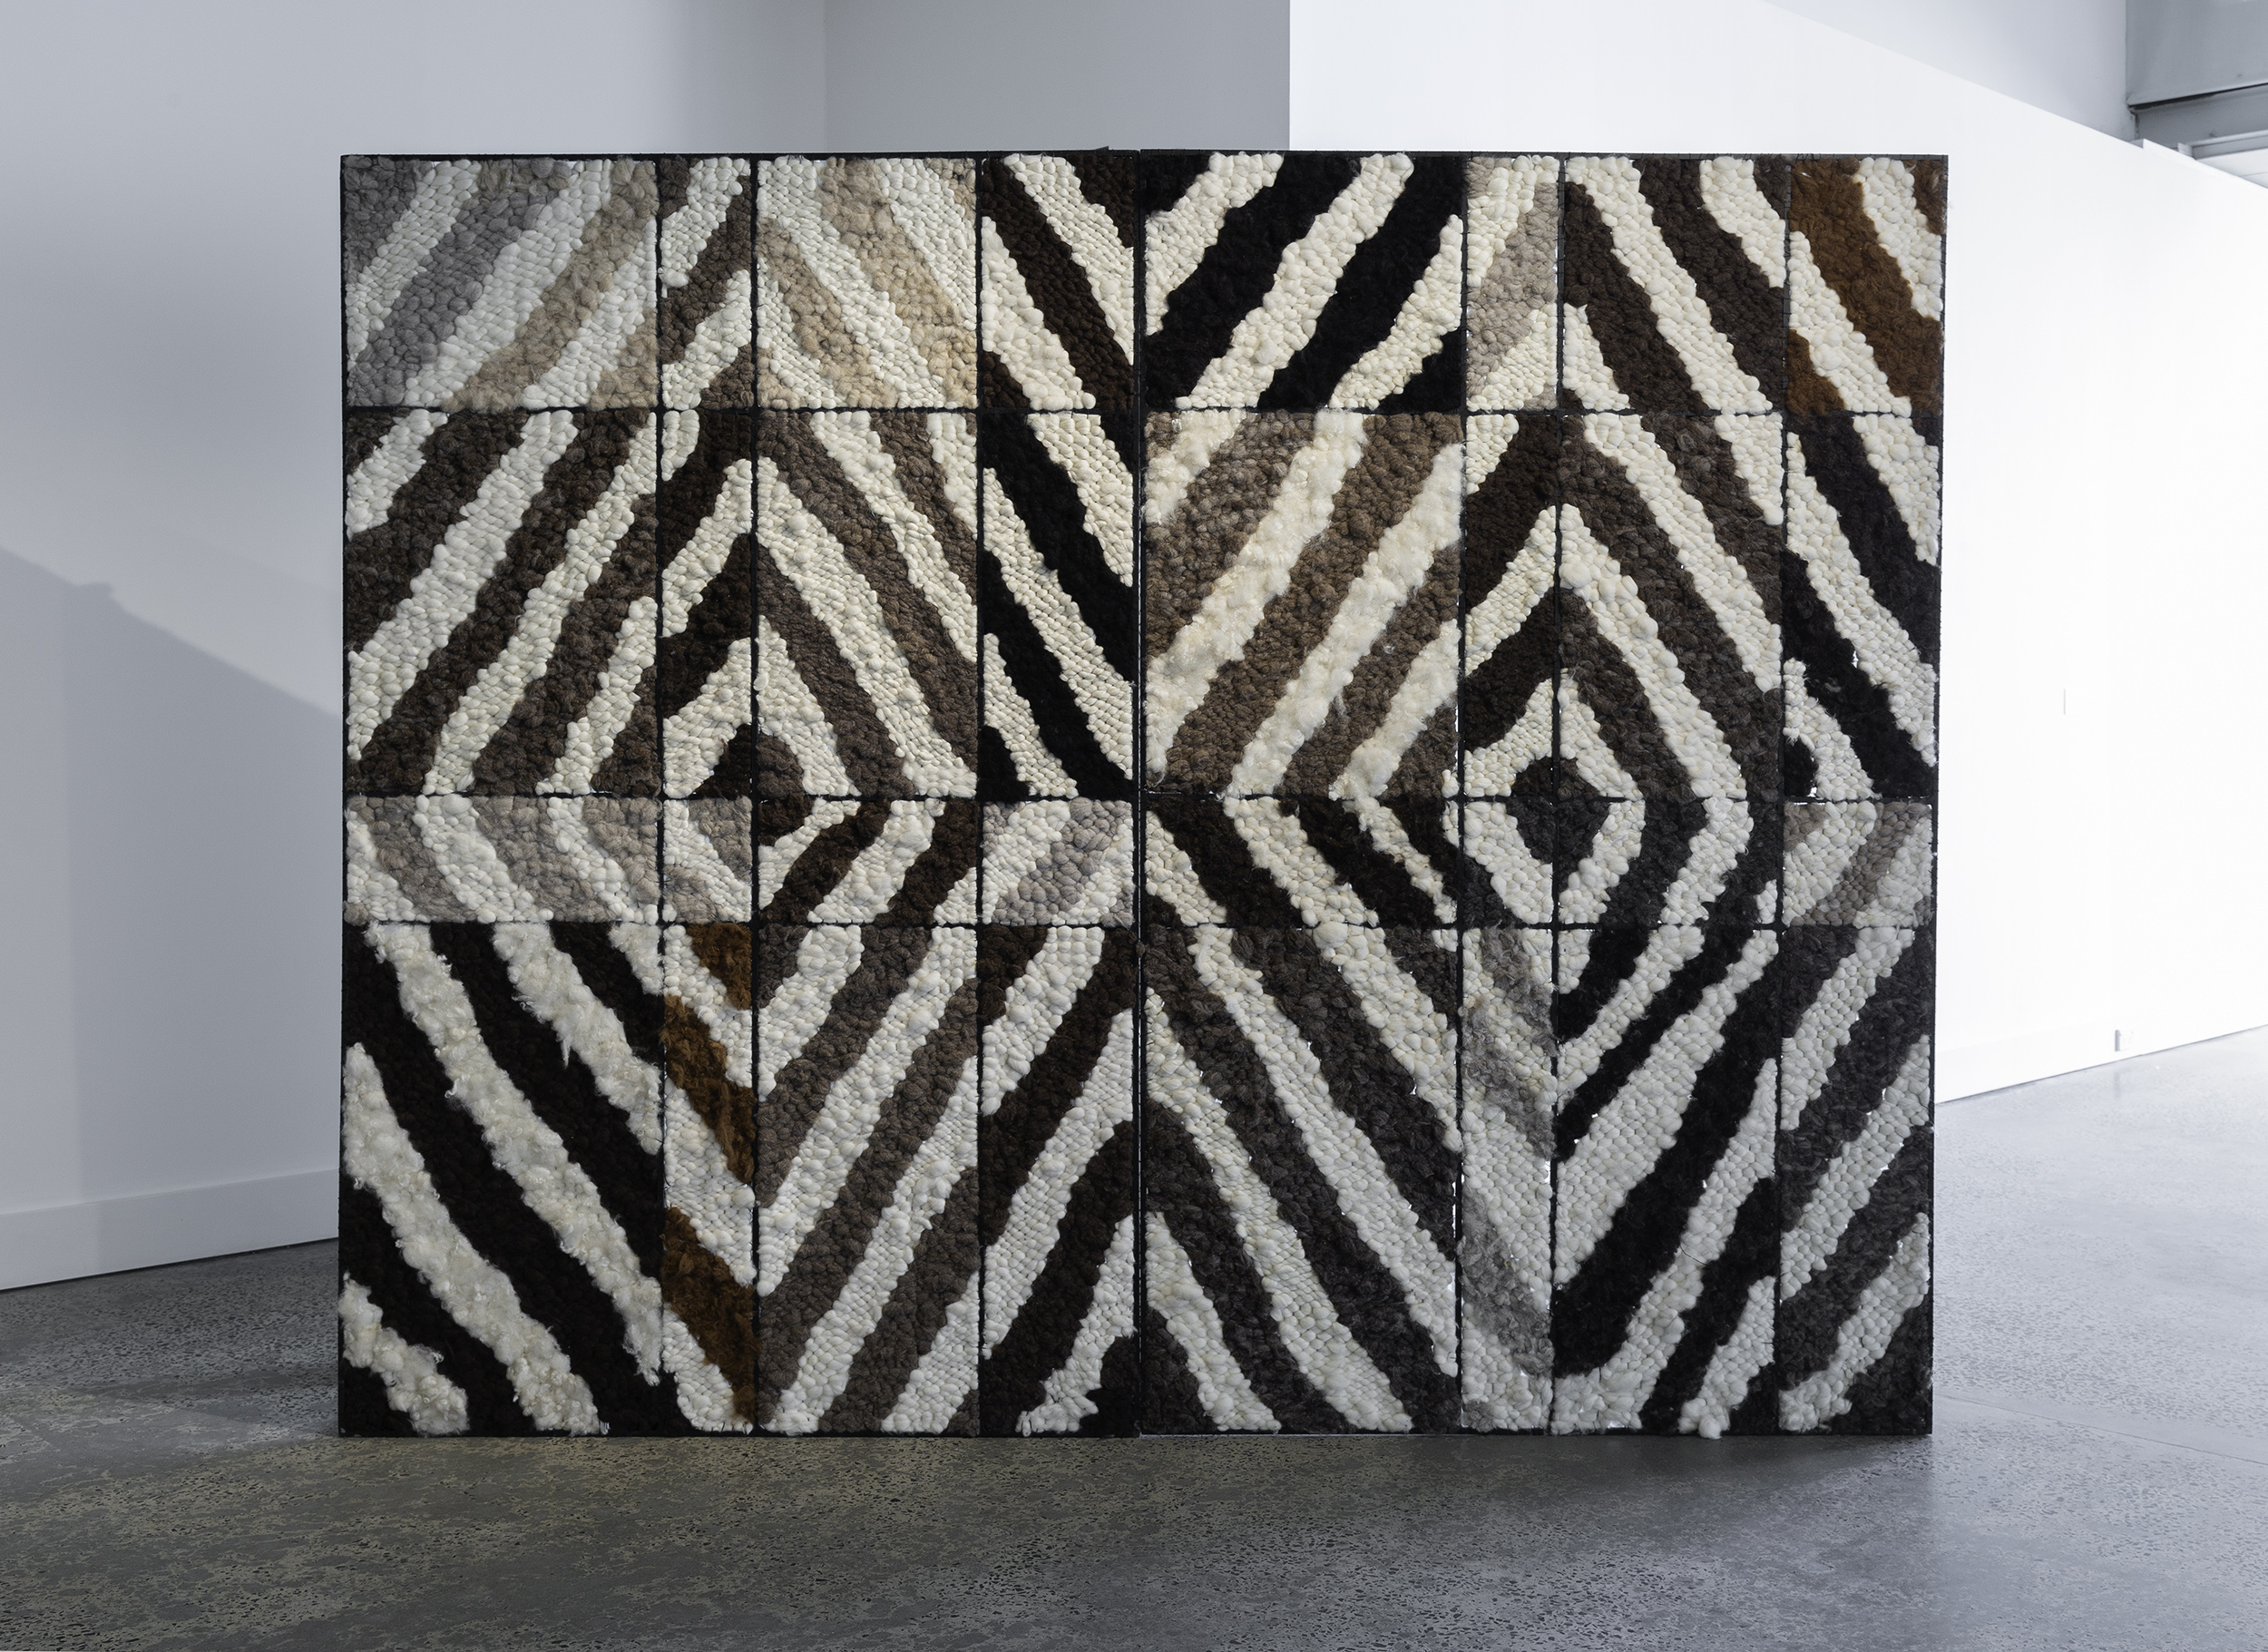 Sanné Mestrom’s&nbsp;Black Painting III&nbsp;2014, unspun undyed woollen tapestry, steel, 200 x 250 x 51cm. Photography by Christian Capurro.